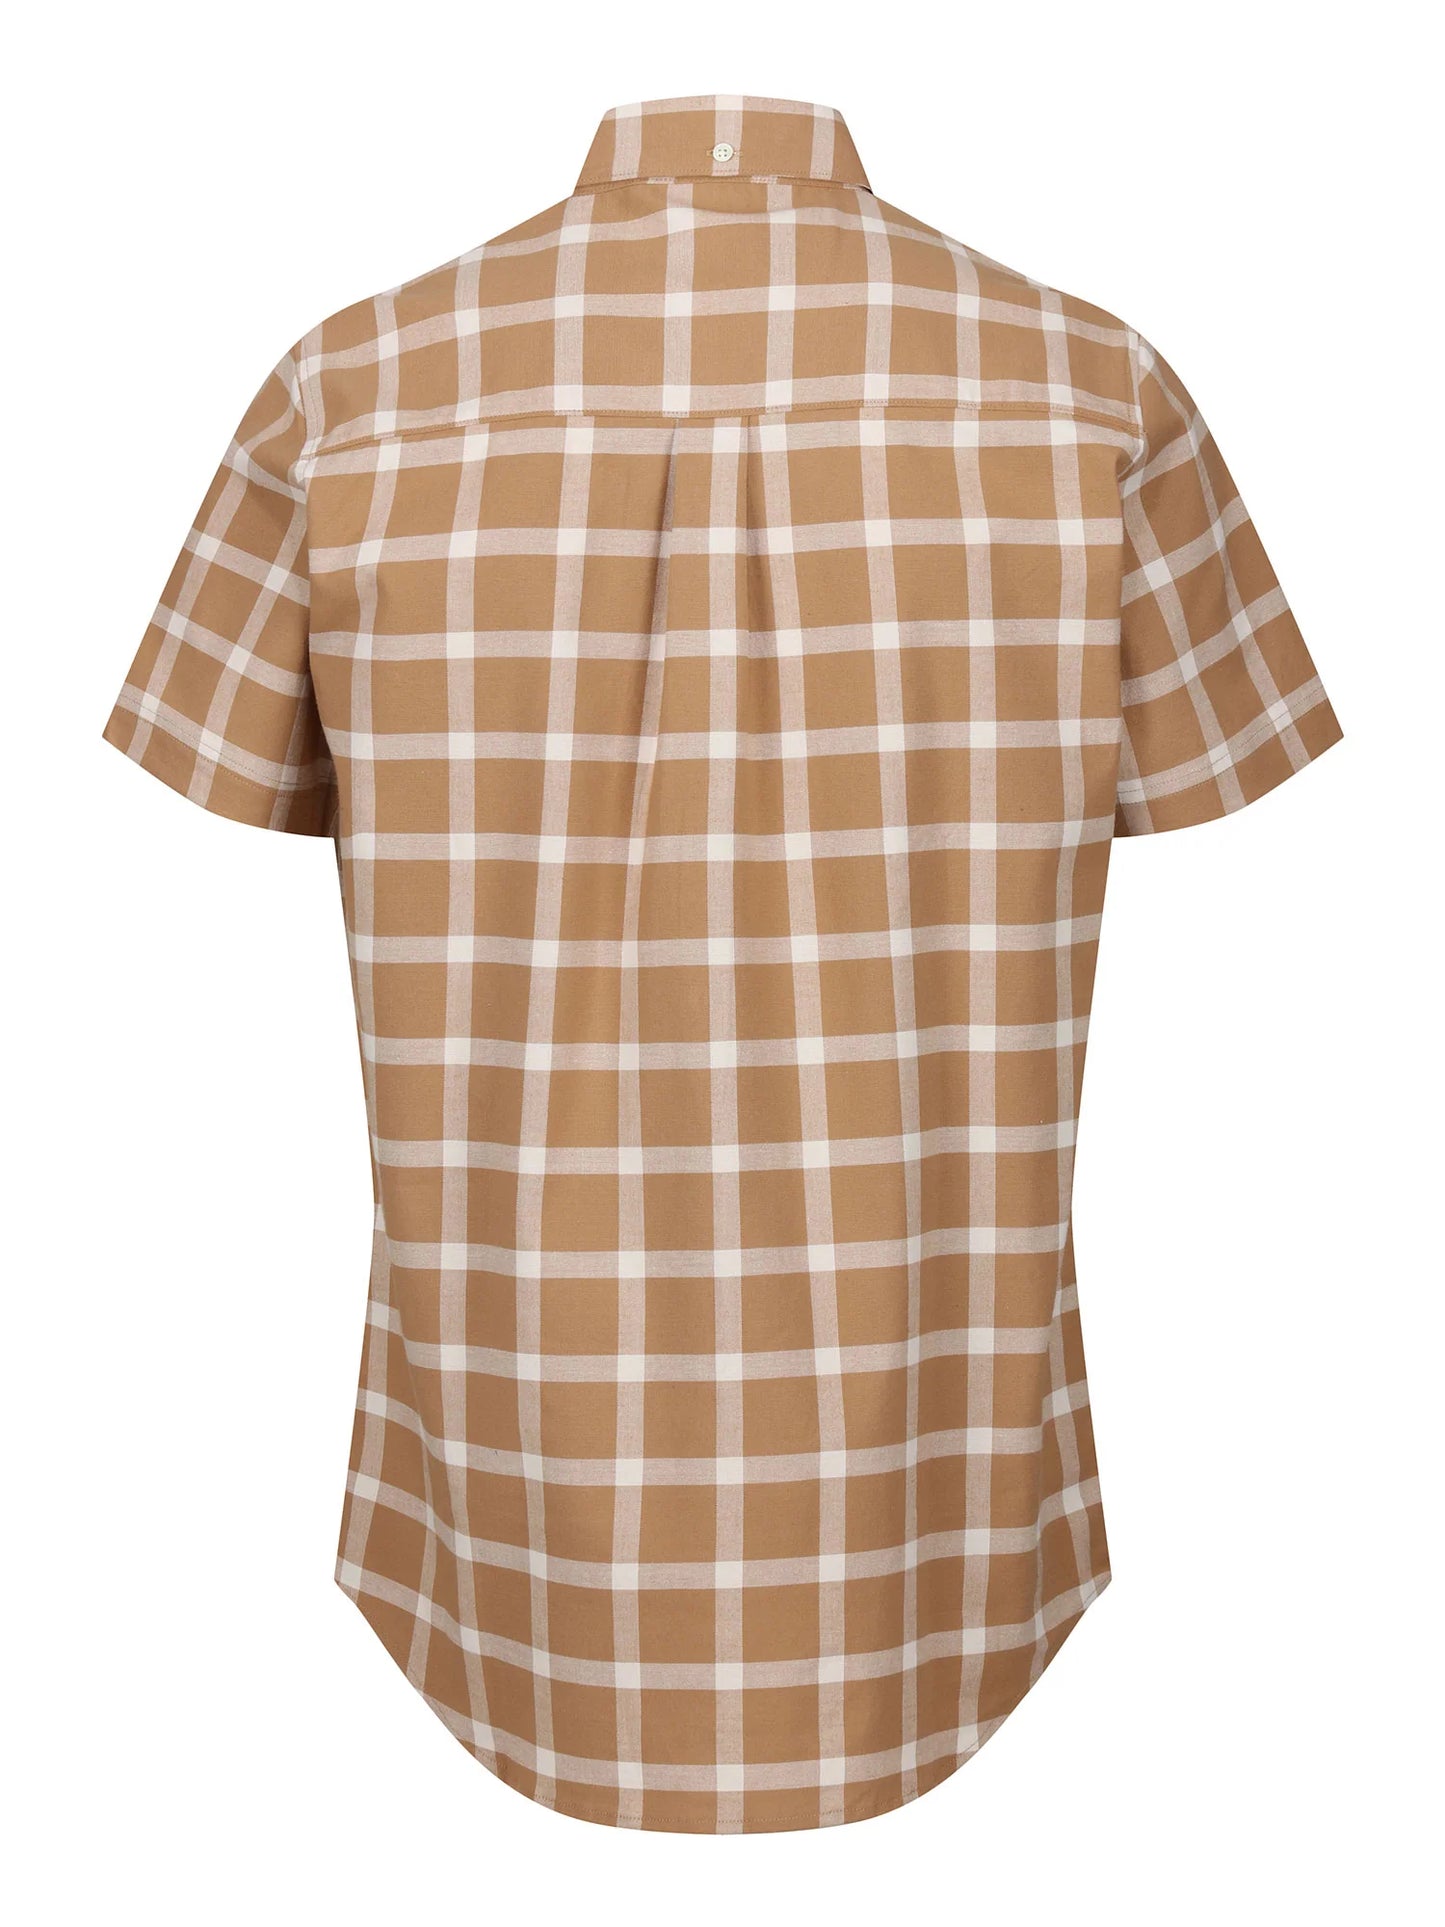 Luke 1977 - Cambridge S/S Shirt Caramel / Ecru